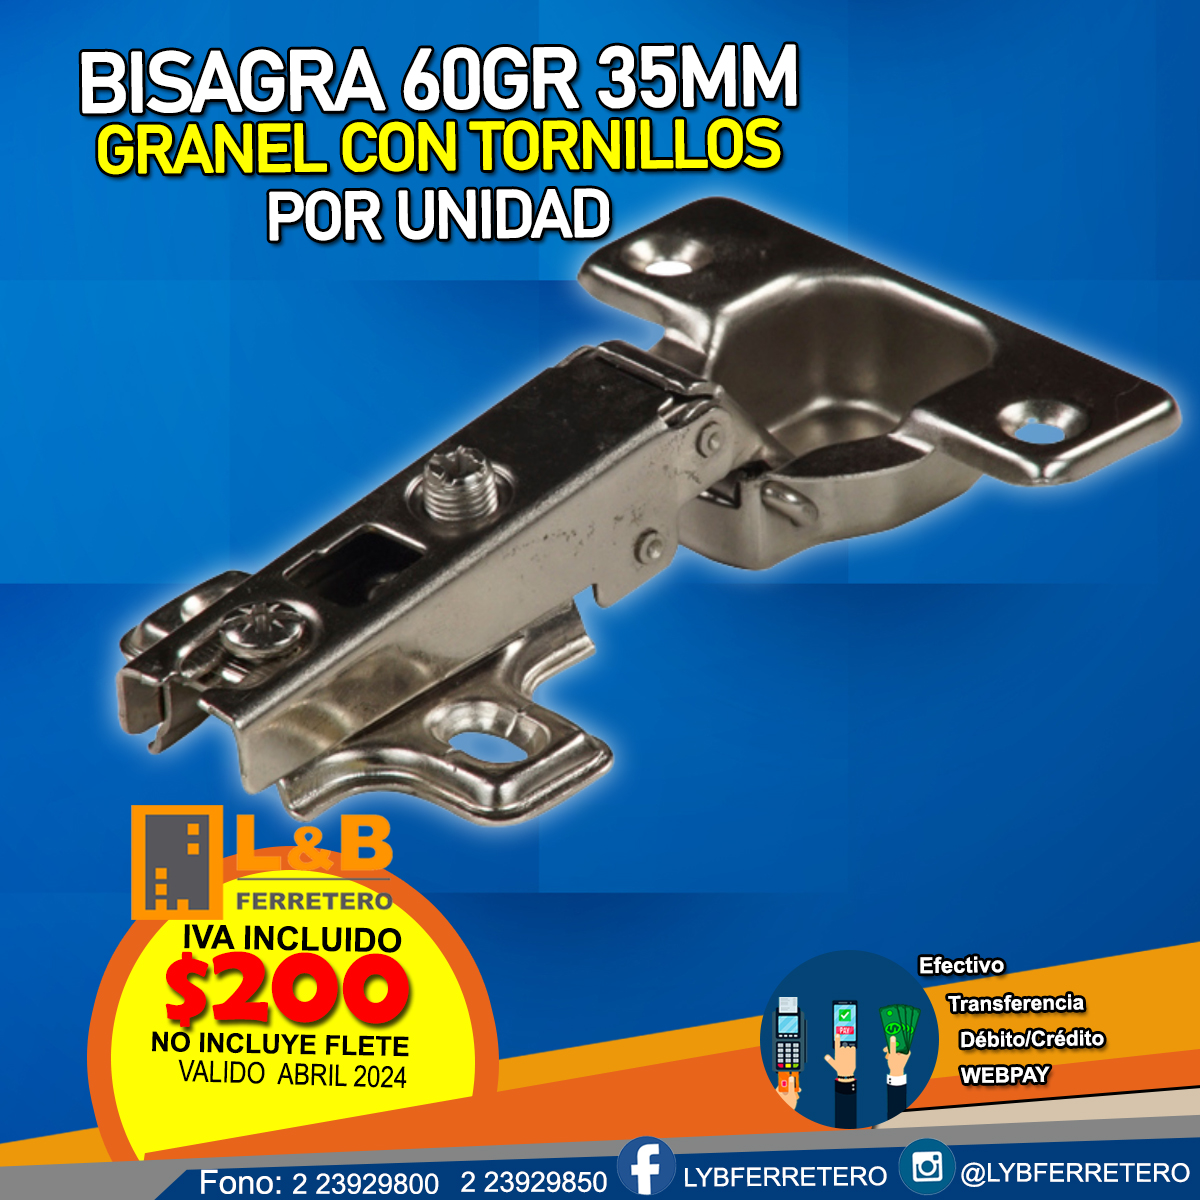 Bisagra 60GR 35mm Granel C/Tornillos X Unidad